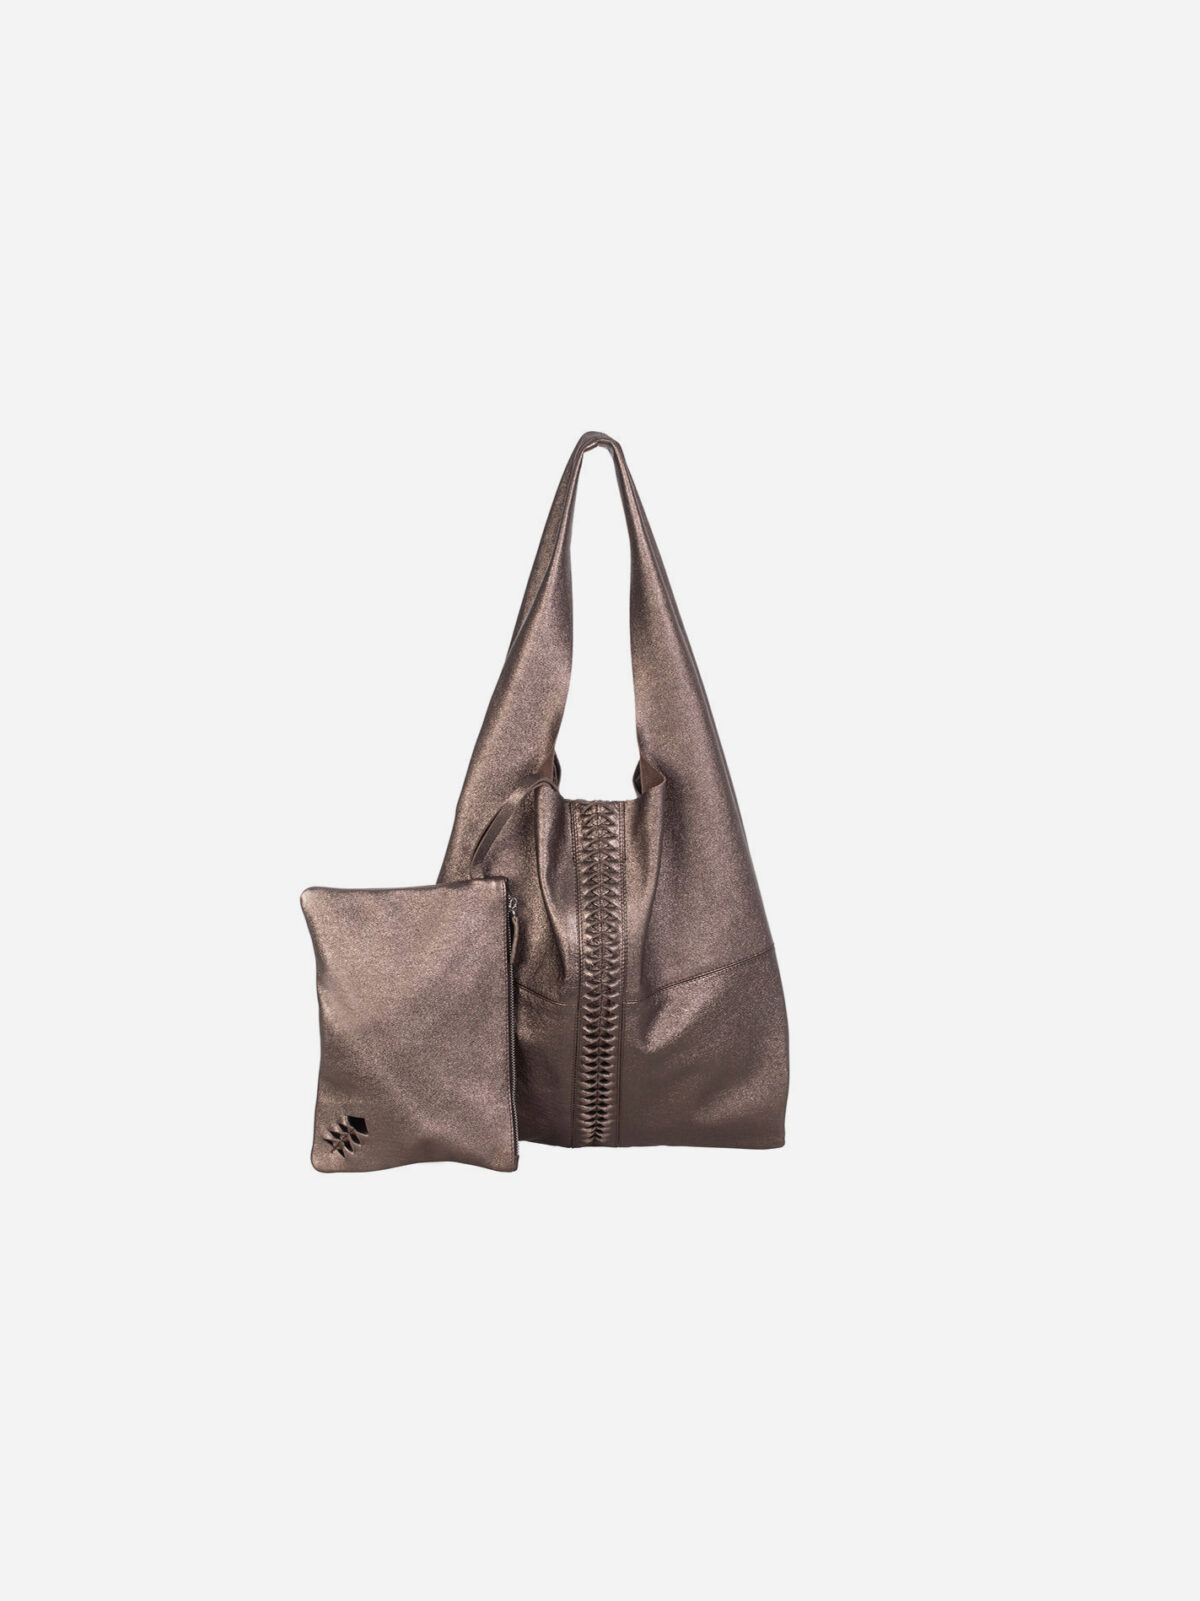 IDEM_Bottero-Bronze-leather-bag-handmade-tote-park-house-matchboxathens